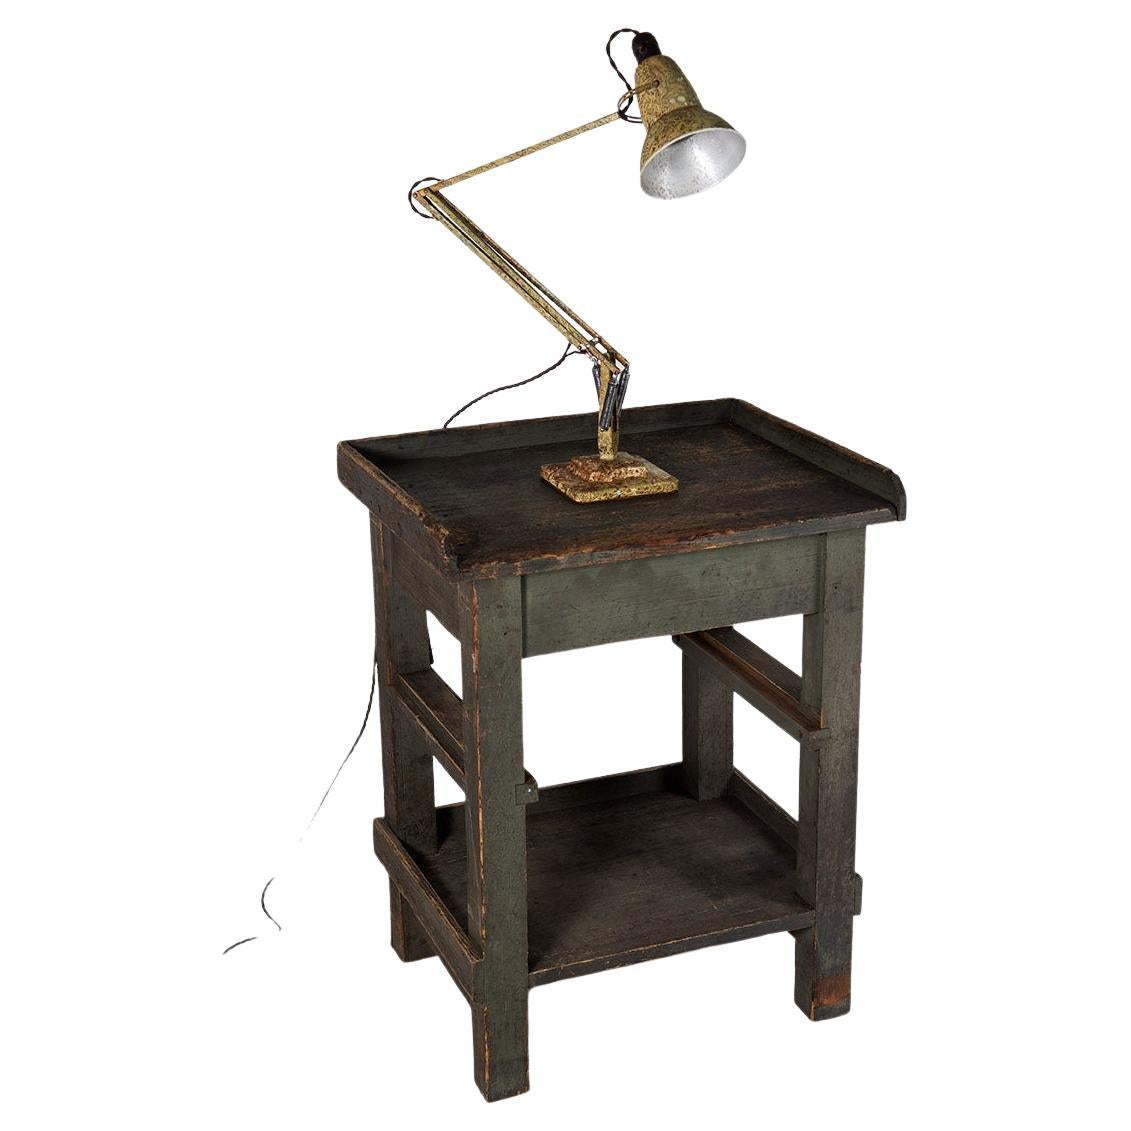 Originale frühe Herbert Terry Anglepoise-Lampe 1227, Schreibtischlampe, Industrielampe